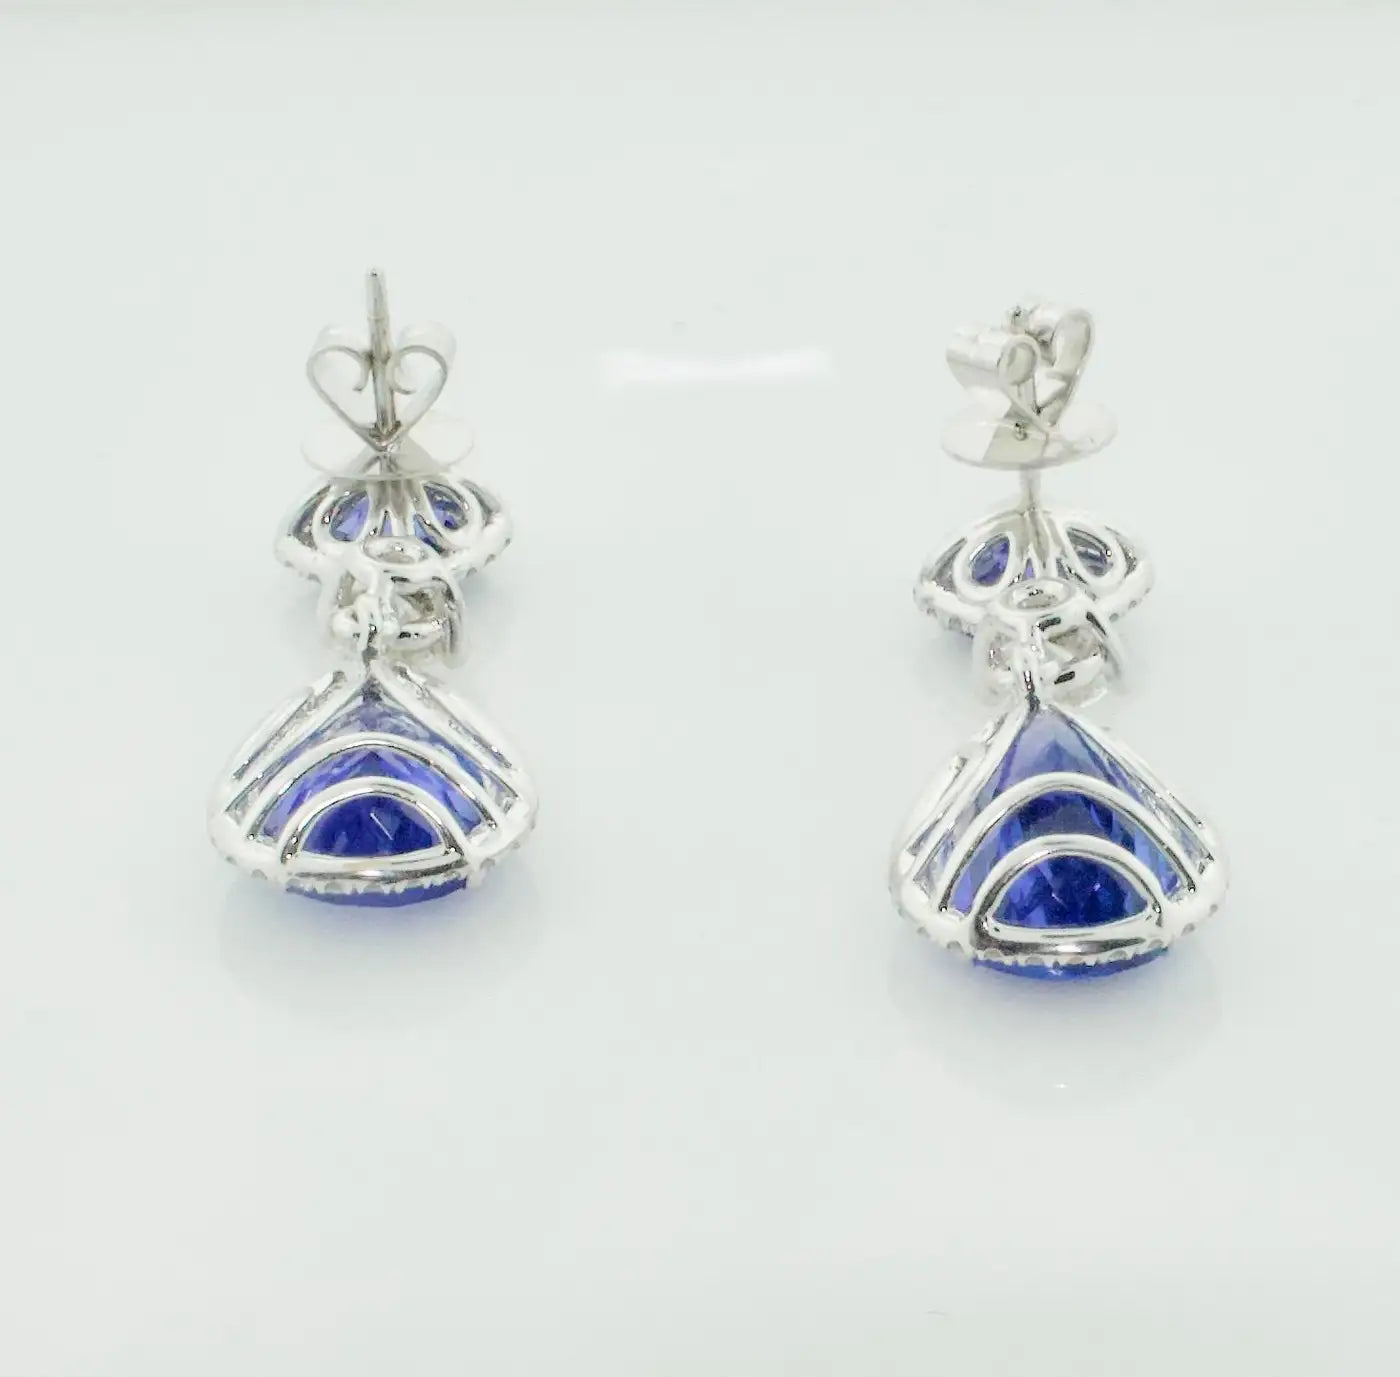 Gorgeous Tanzanite and Diamond Dangling Earrings in 18k